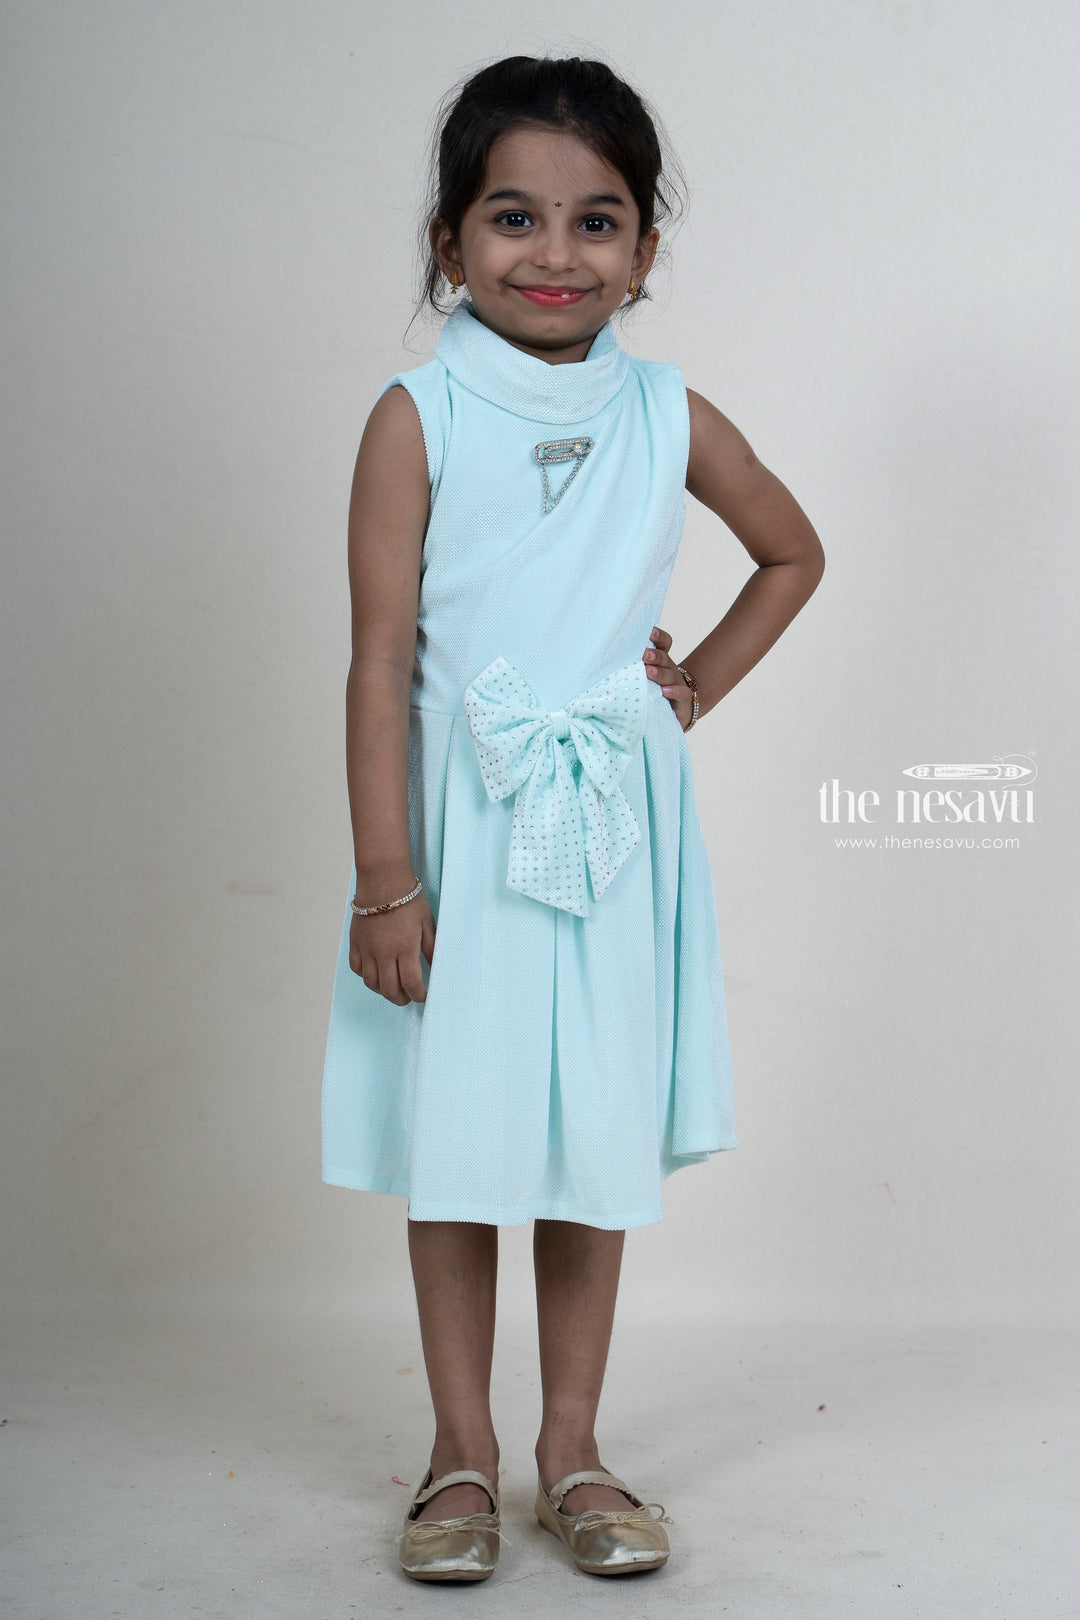 The Nesavu Baby Frock / Jhabla Skyblue Velvet Designer Bow Embellished Party Wear Dresses For Girls psr silks Nesavu 14 (6M) / cyan BFJ234C